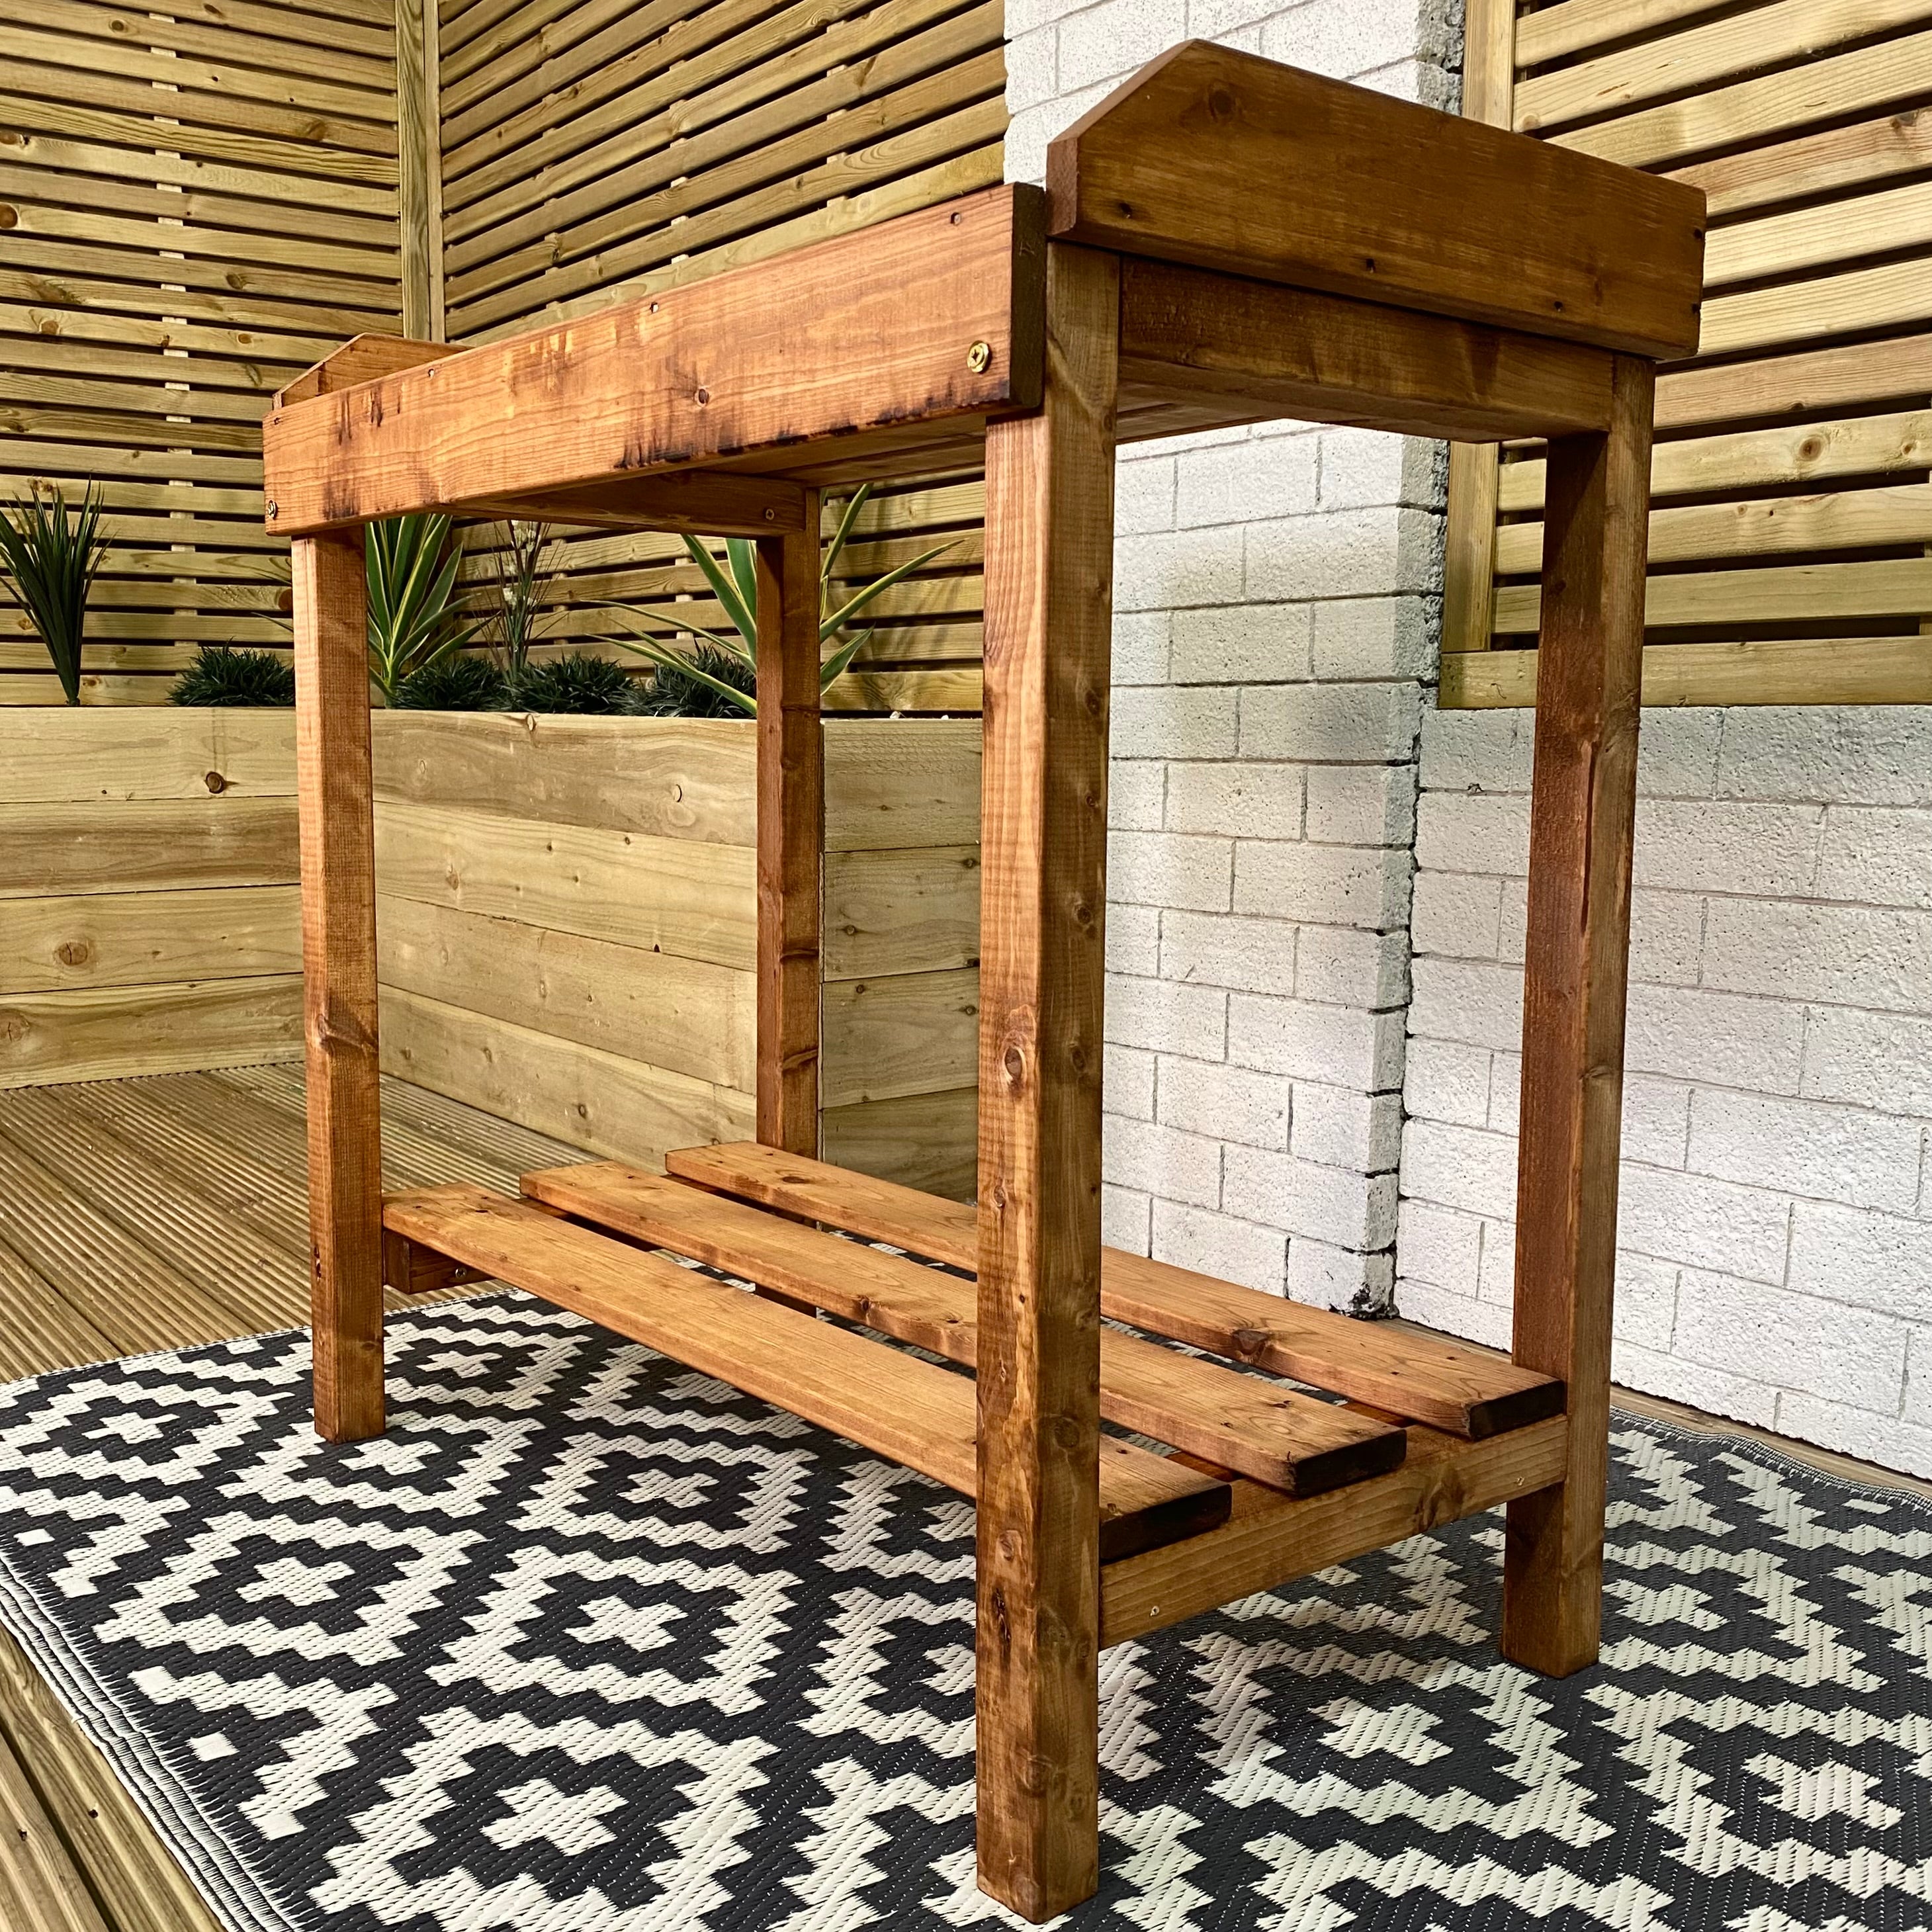 90cm Wooden Outdoor Garden Patio Potting Table Work Bench